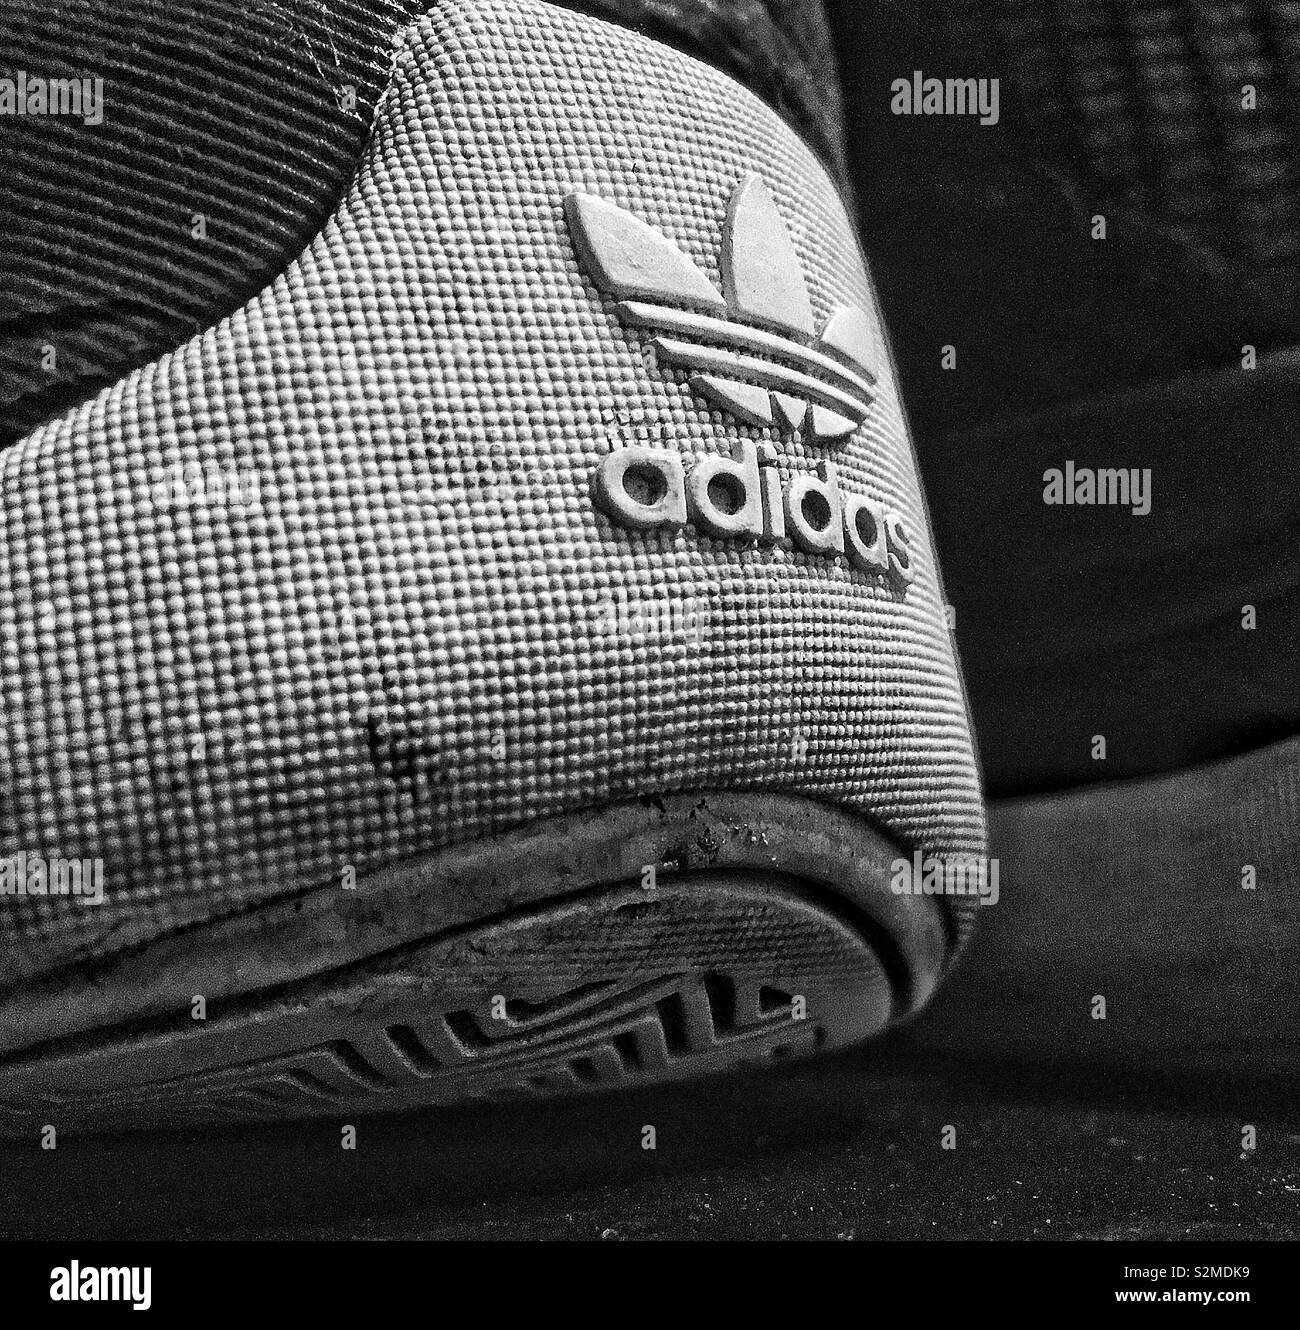 Adidas black and white shoes -Fotos und -Bildmaterial in hoher Auflösung –  Alamy